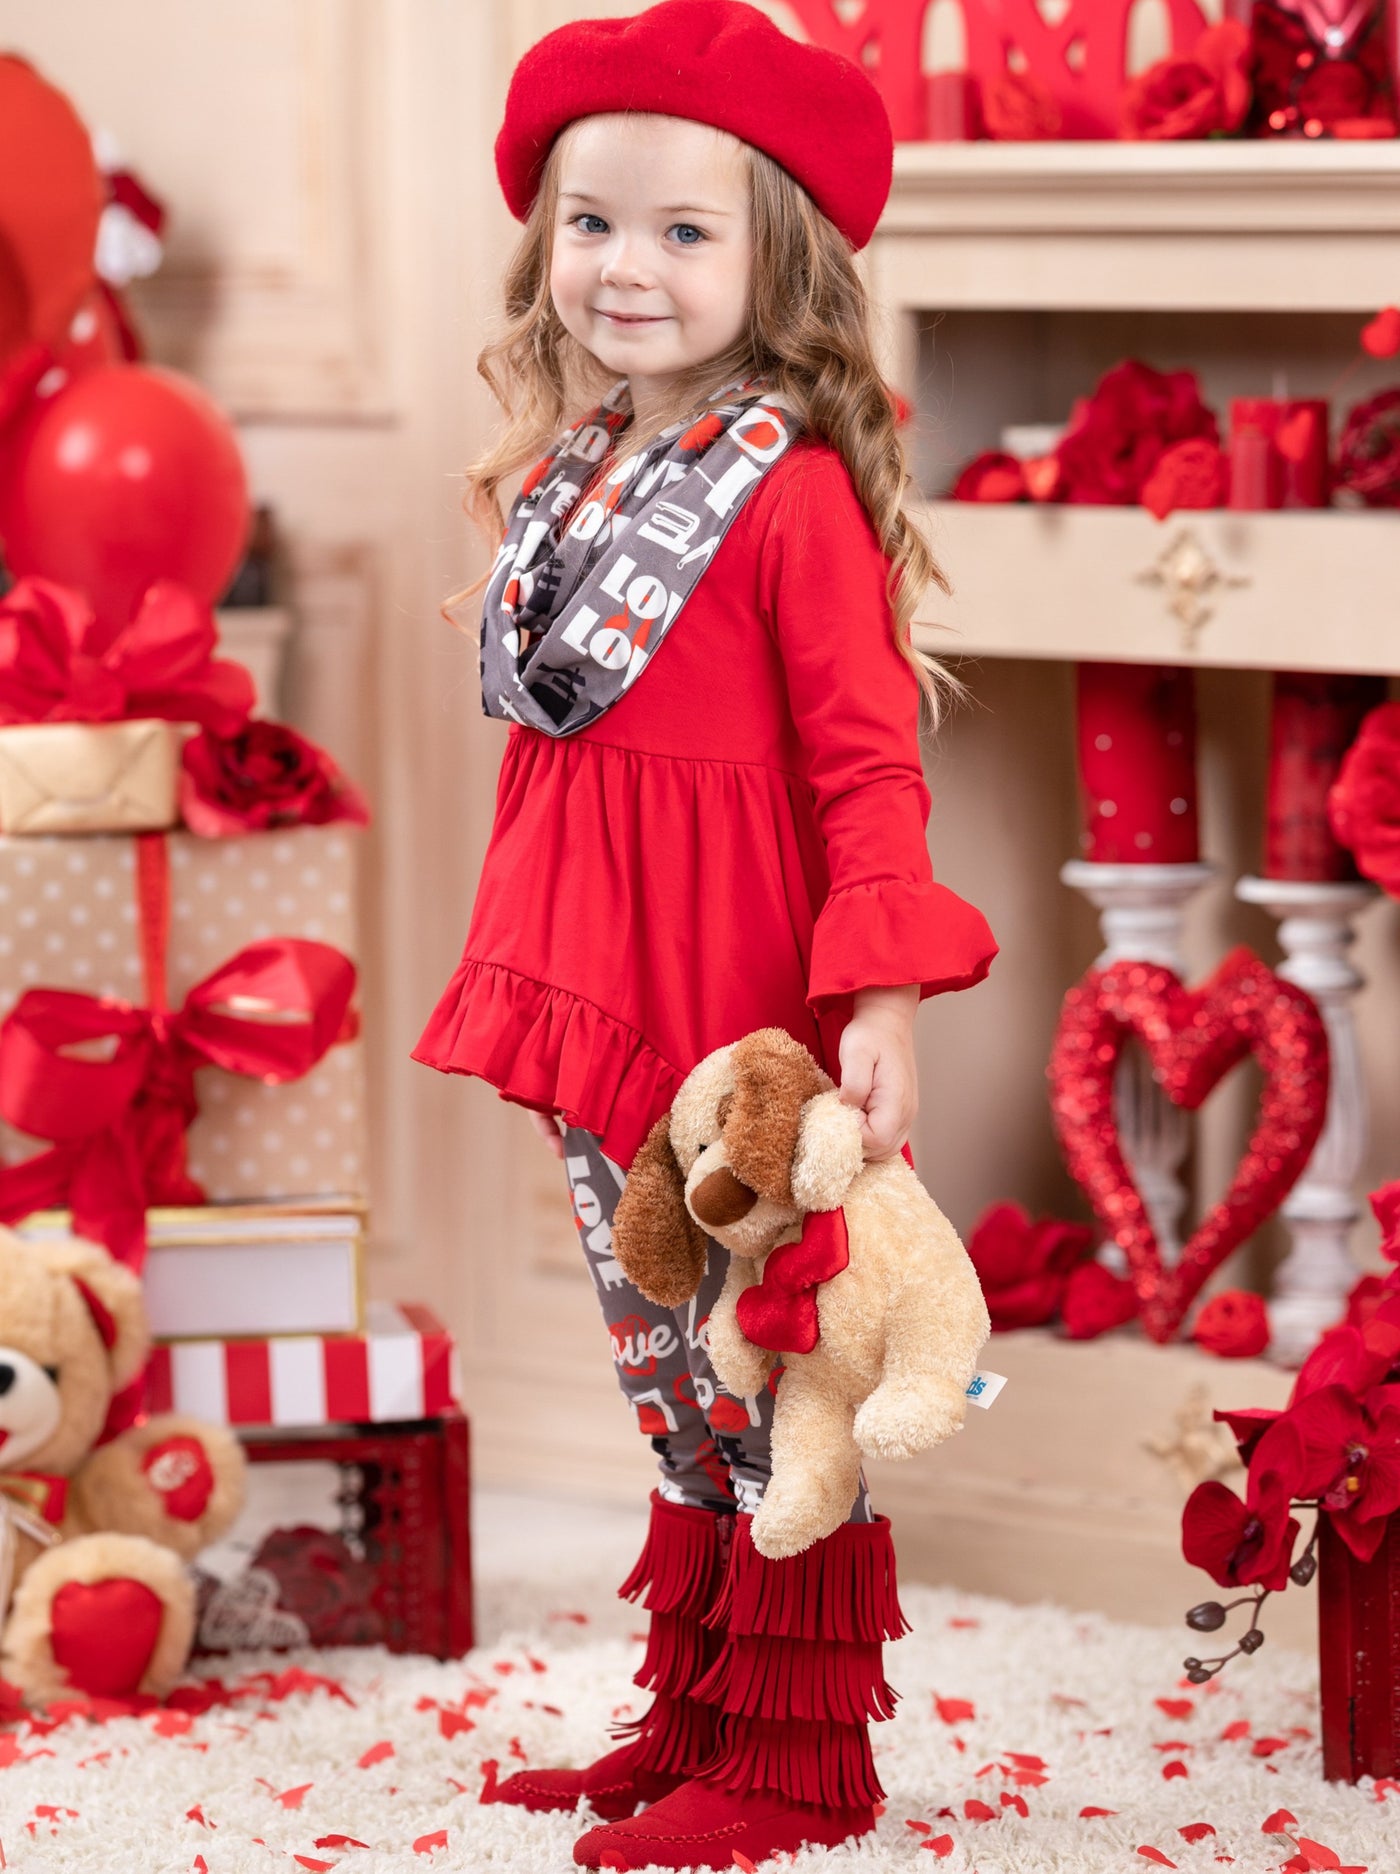 Kids Valentine's Clothes | Girls Love Hi-Lo Tunic Scarf & Legging Set